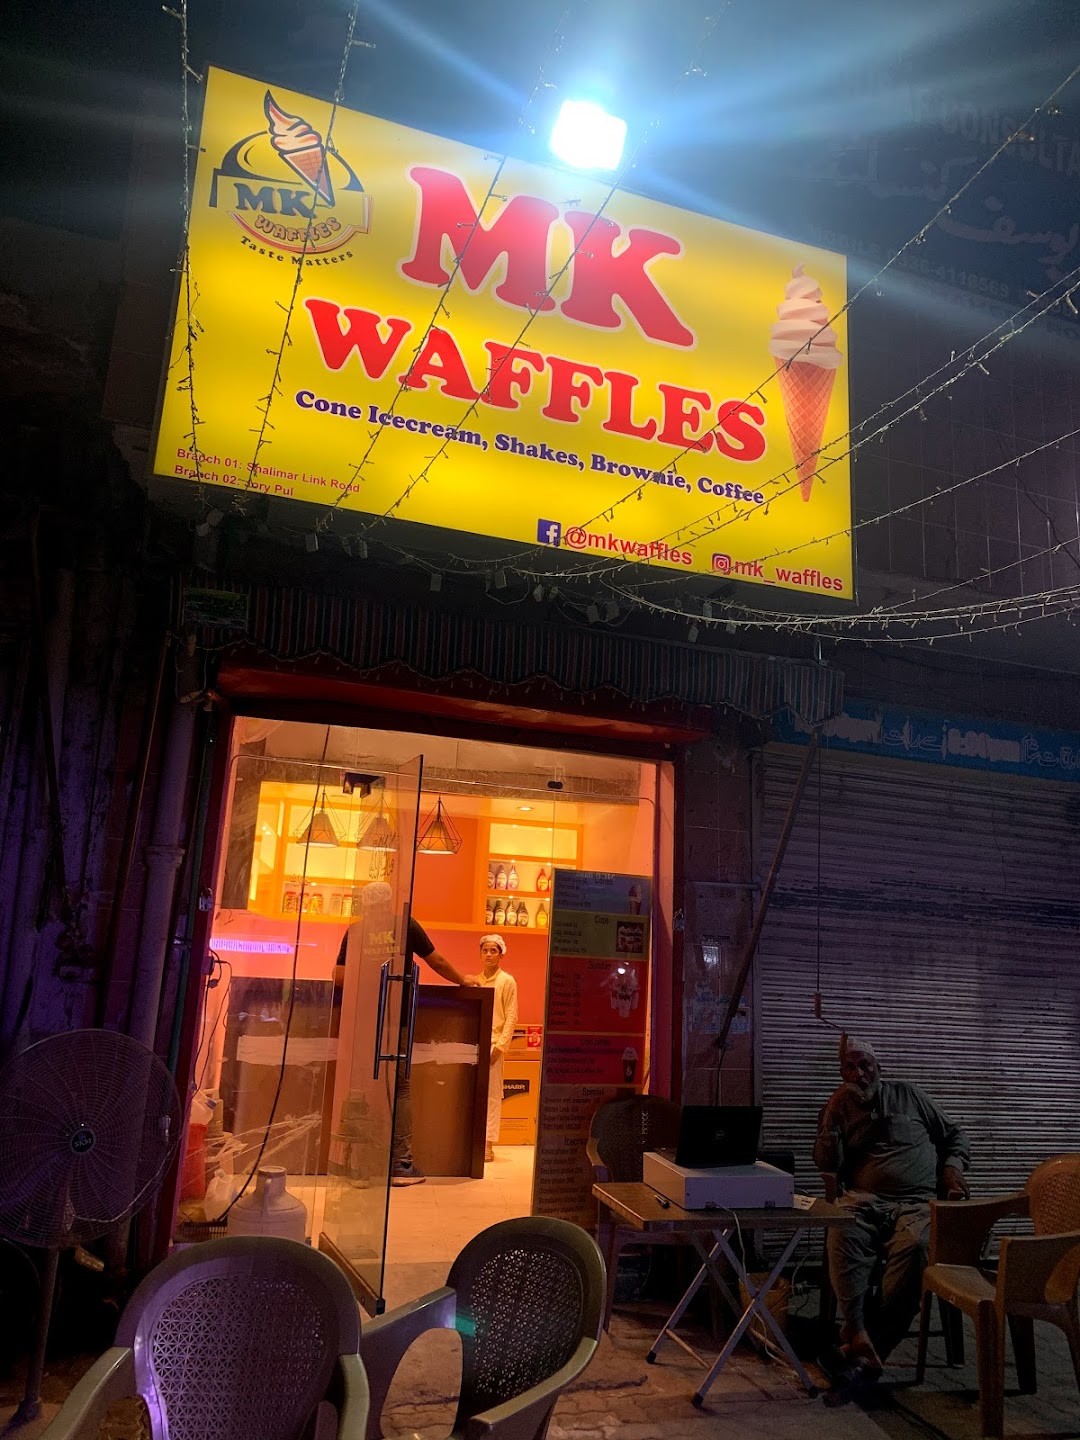 Mk waffles